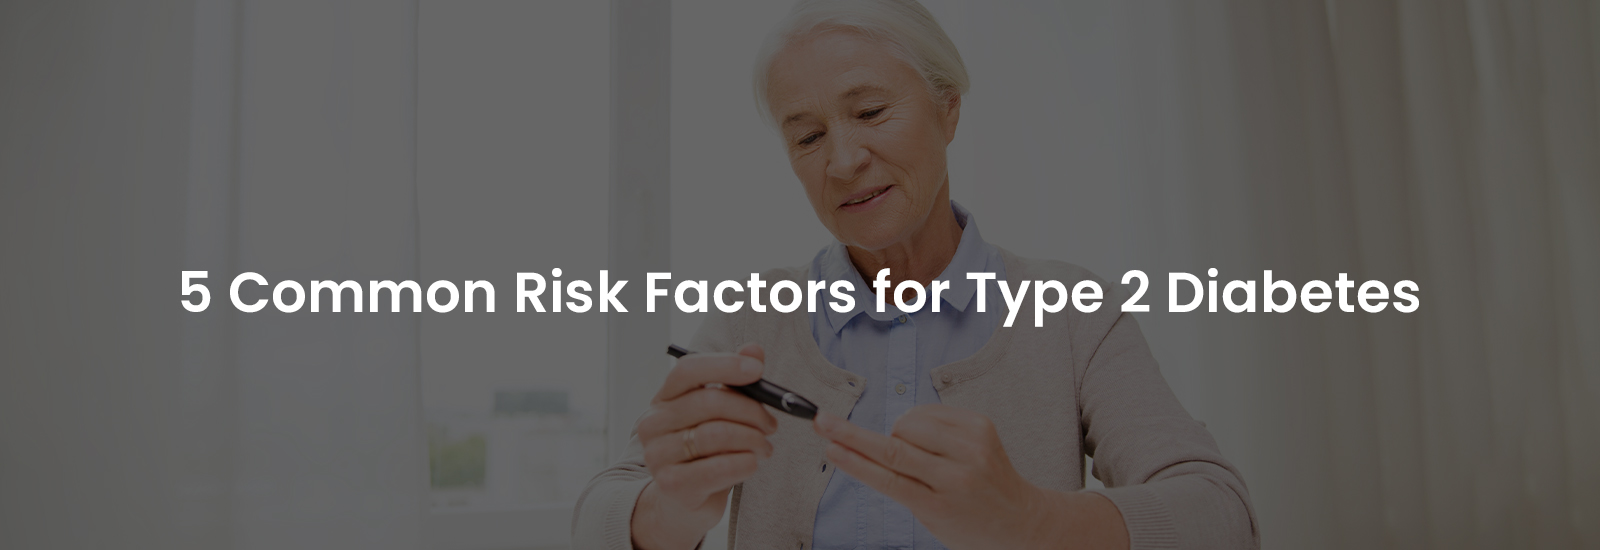 5 Common Risk Factors for Type 2 Diabetes | Banner Image